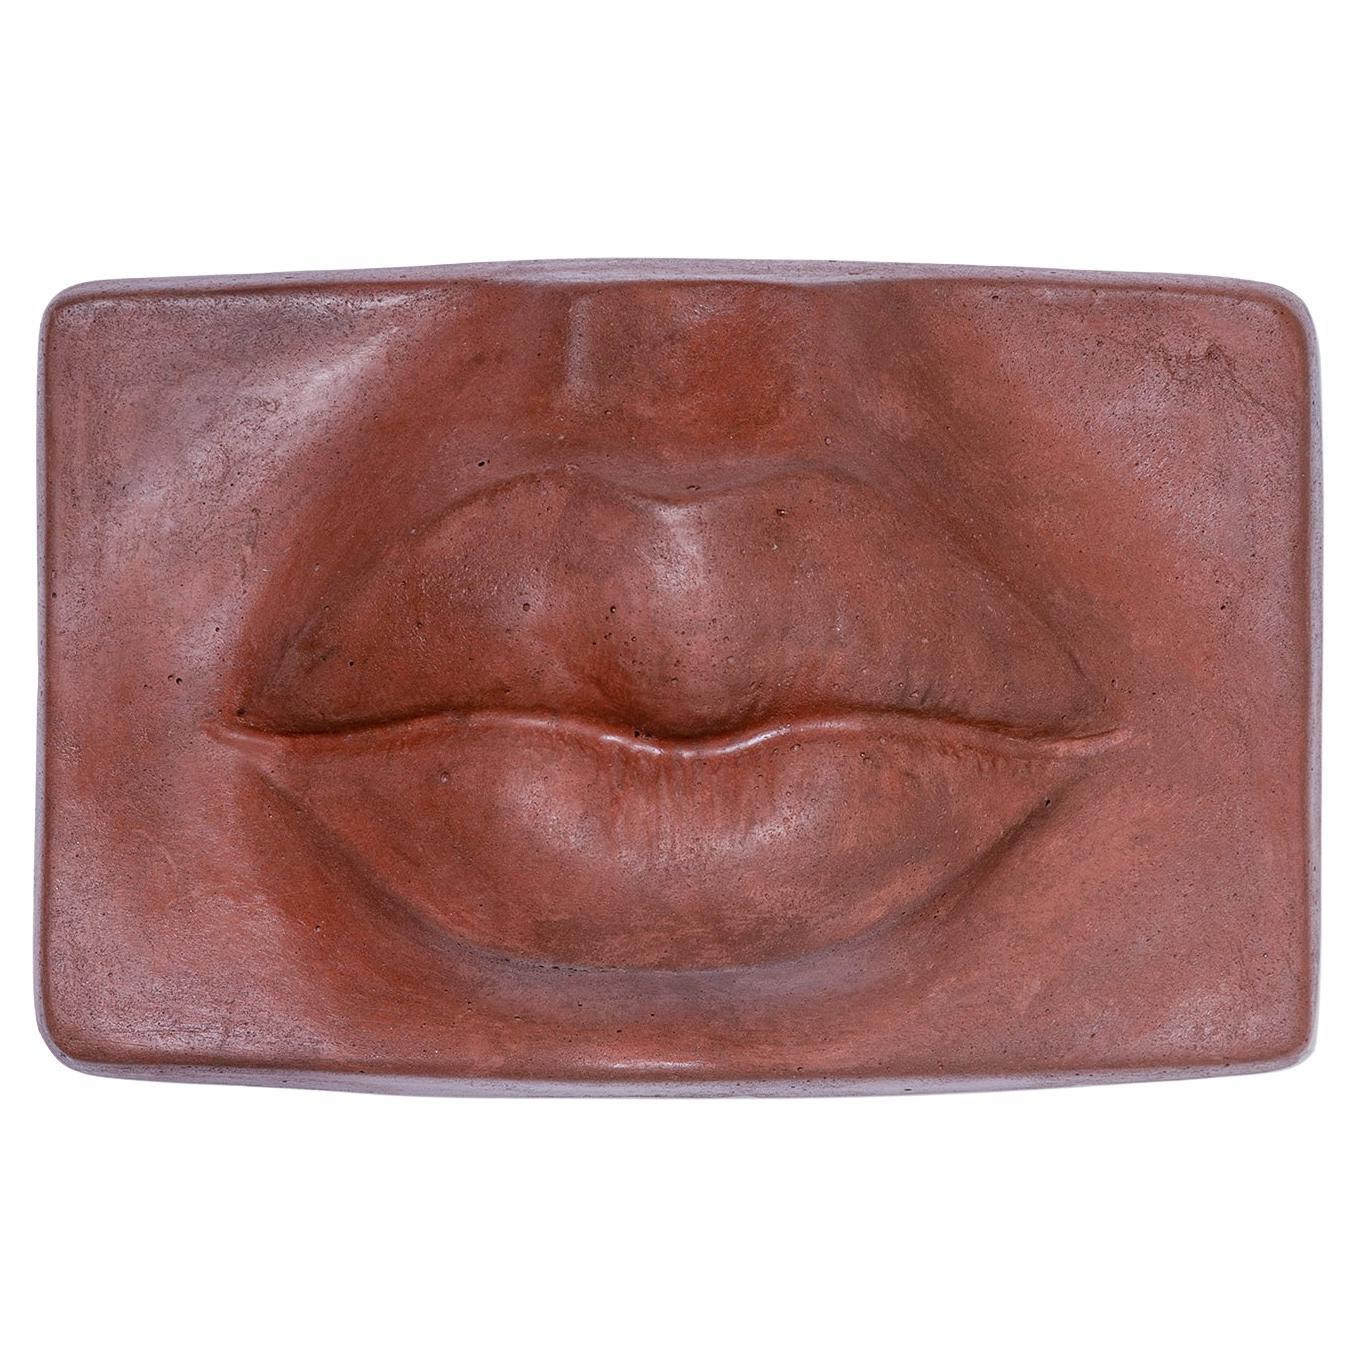 Lips Rigel Sculpture